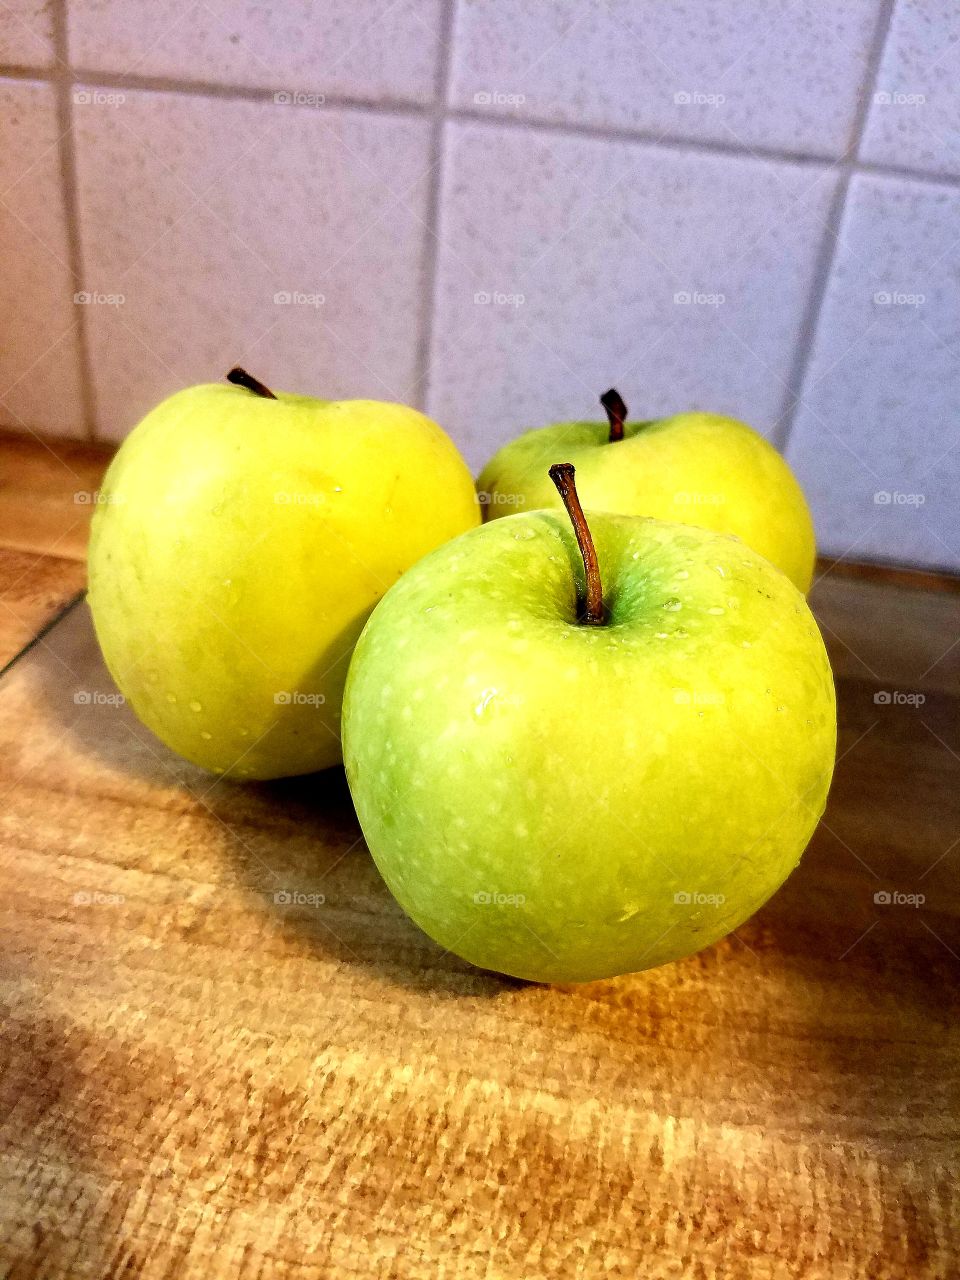 Granny smith apples